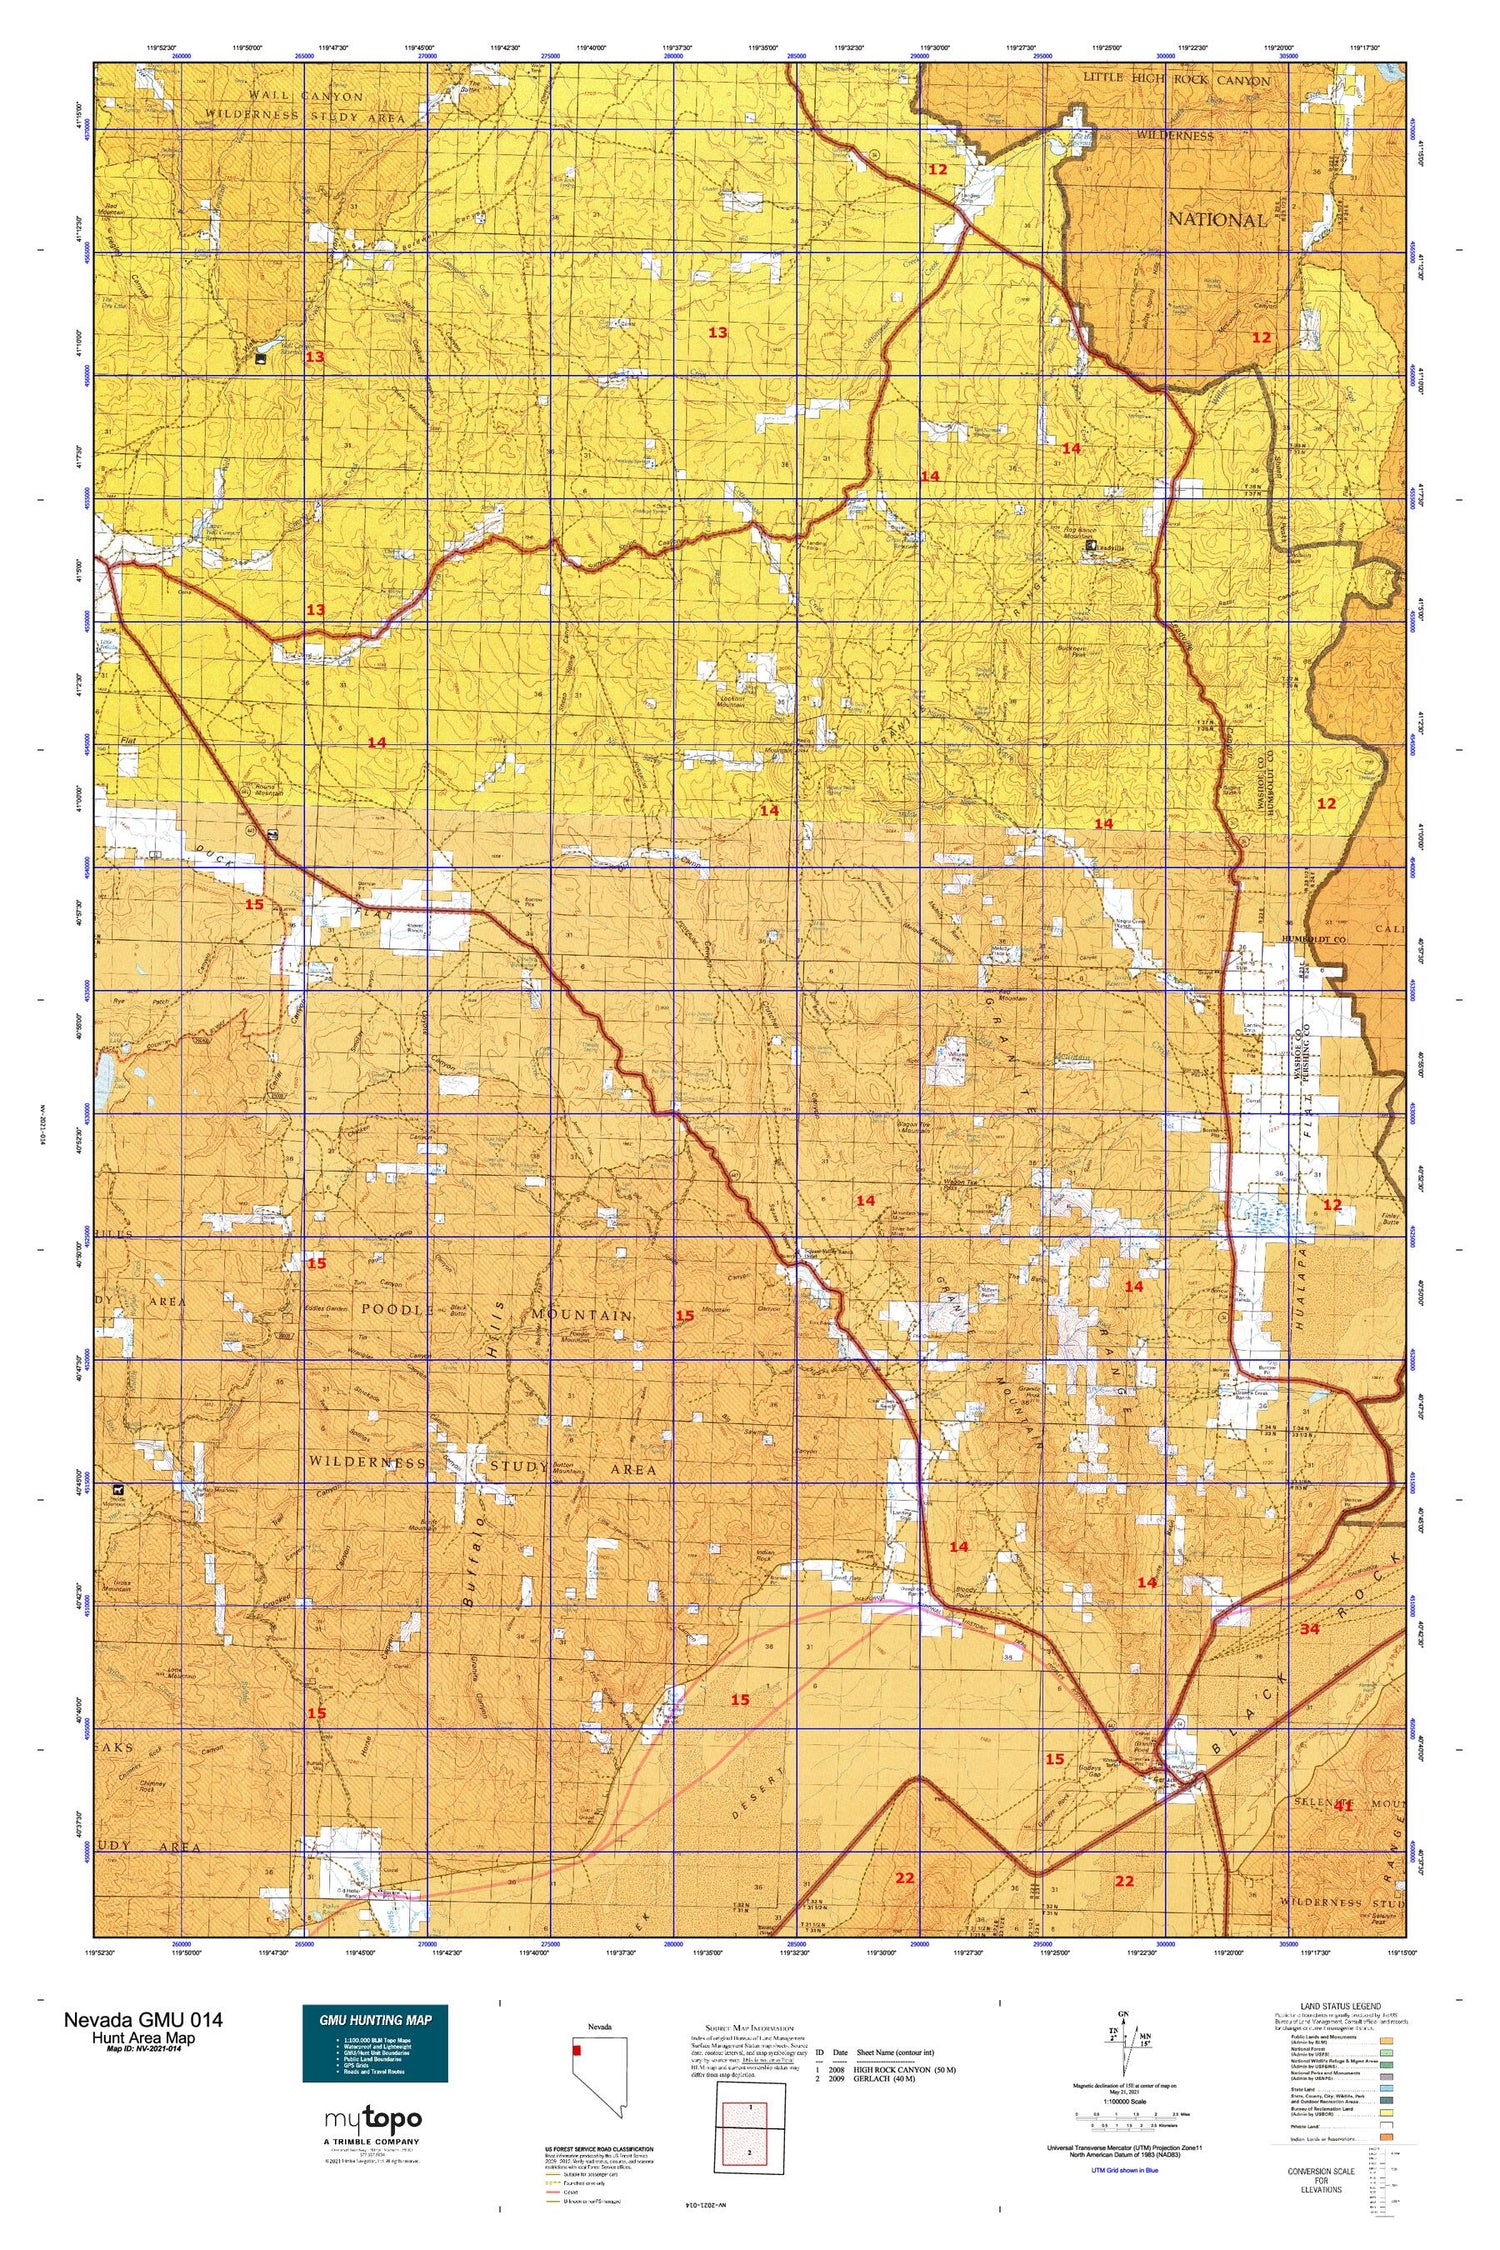 Nevada GMU 014 Map Image